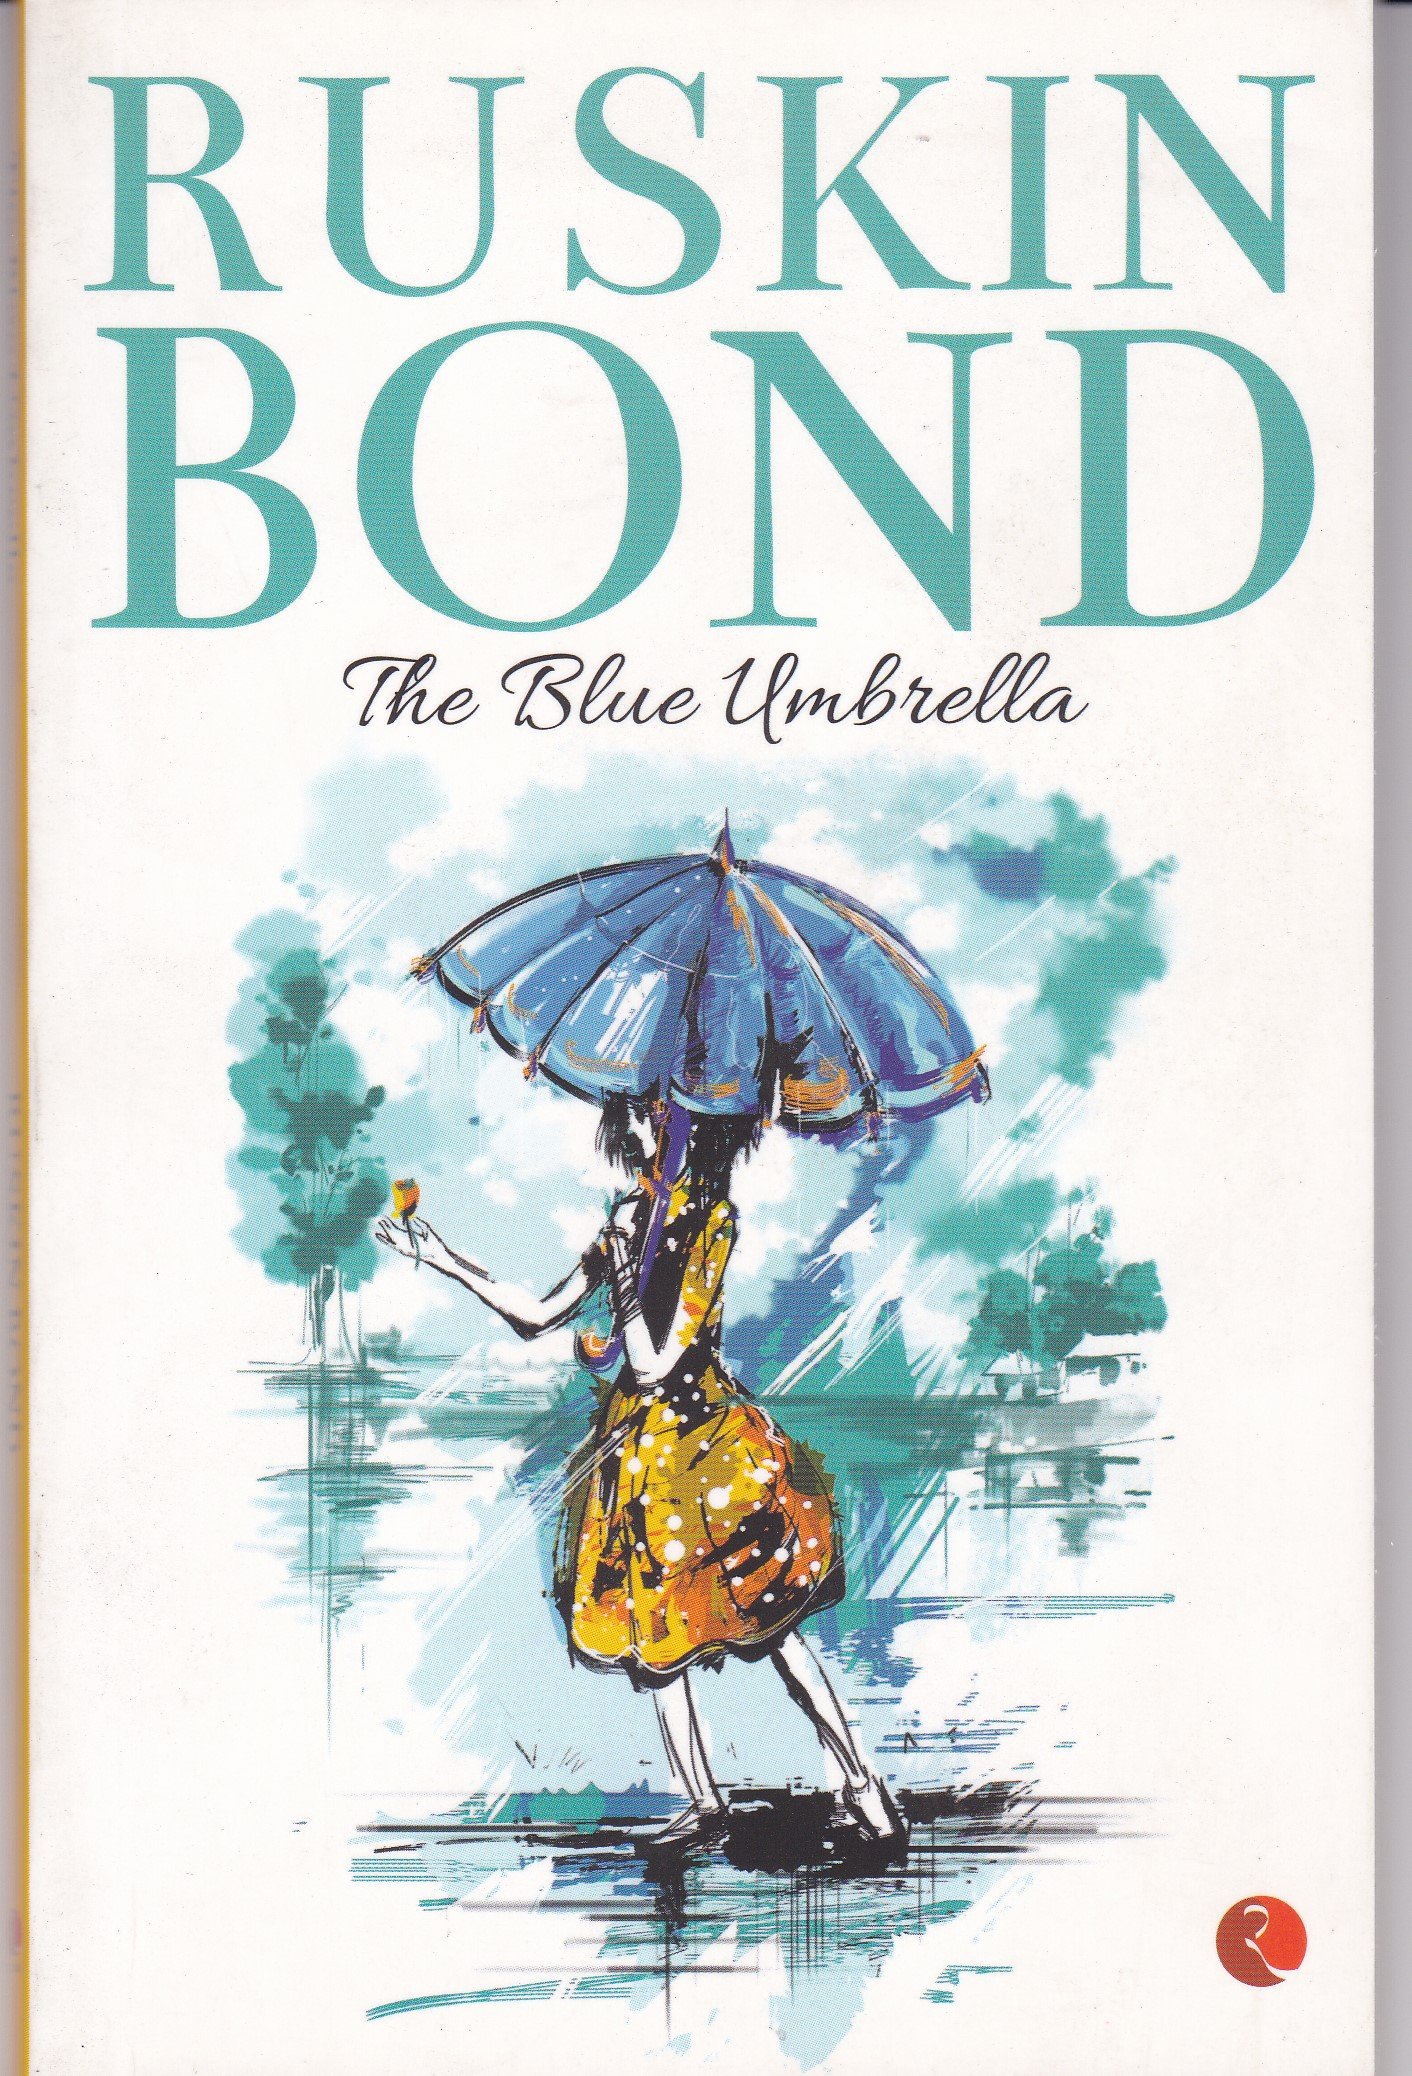 The blue Umbrella by Ruskin Bond